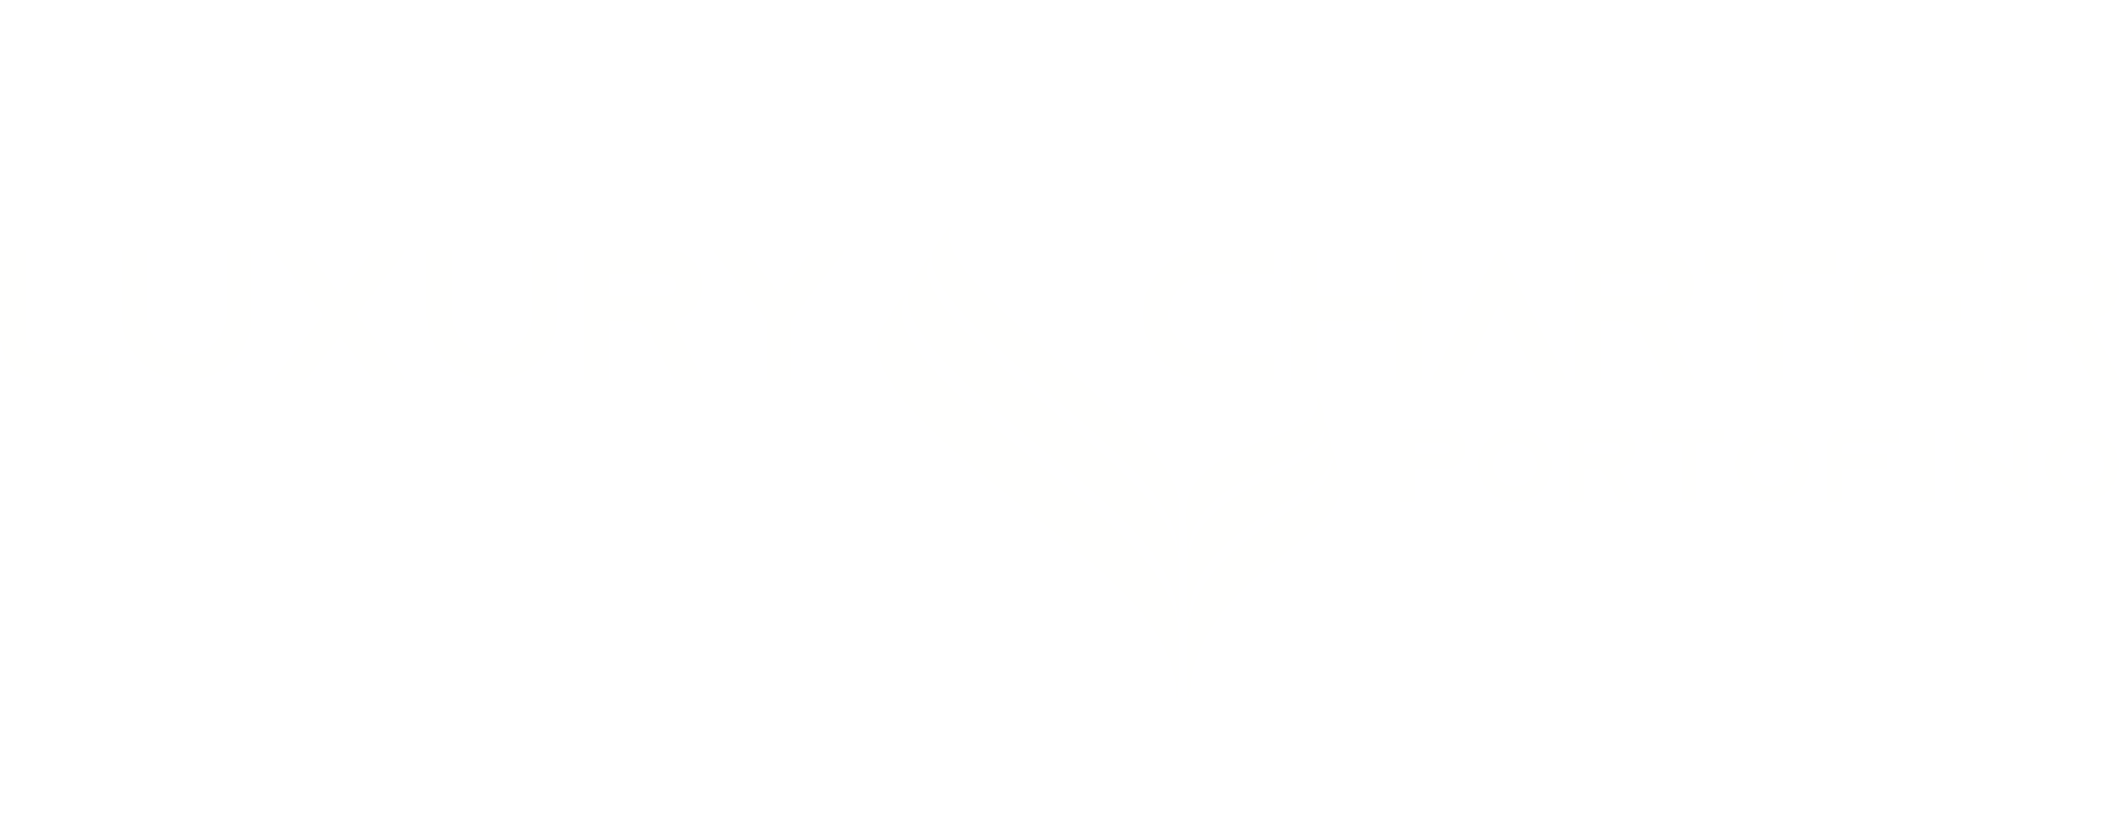 Luxury Charter Portofino Logo